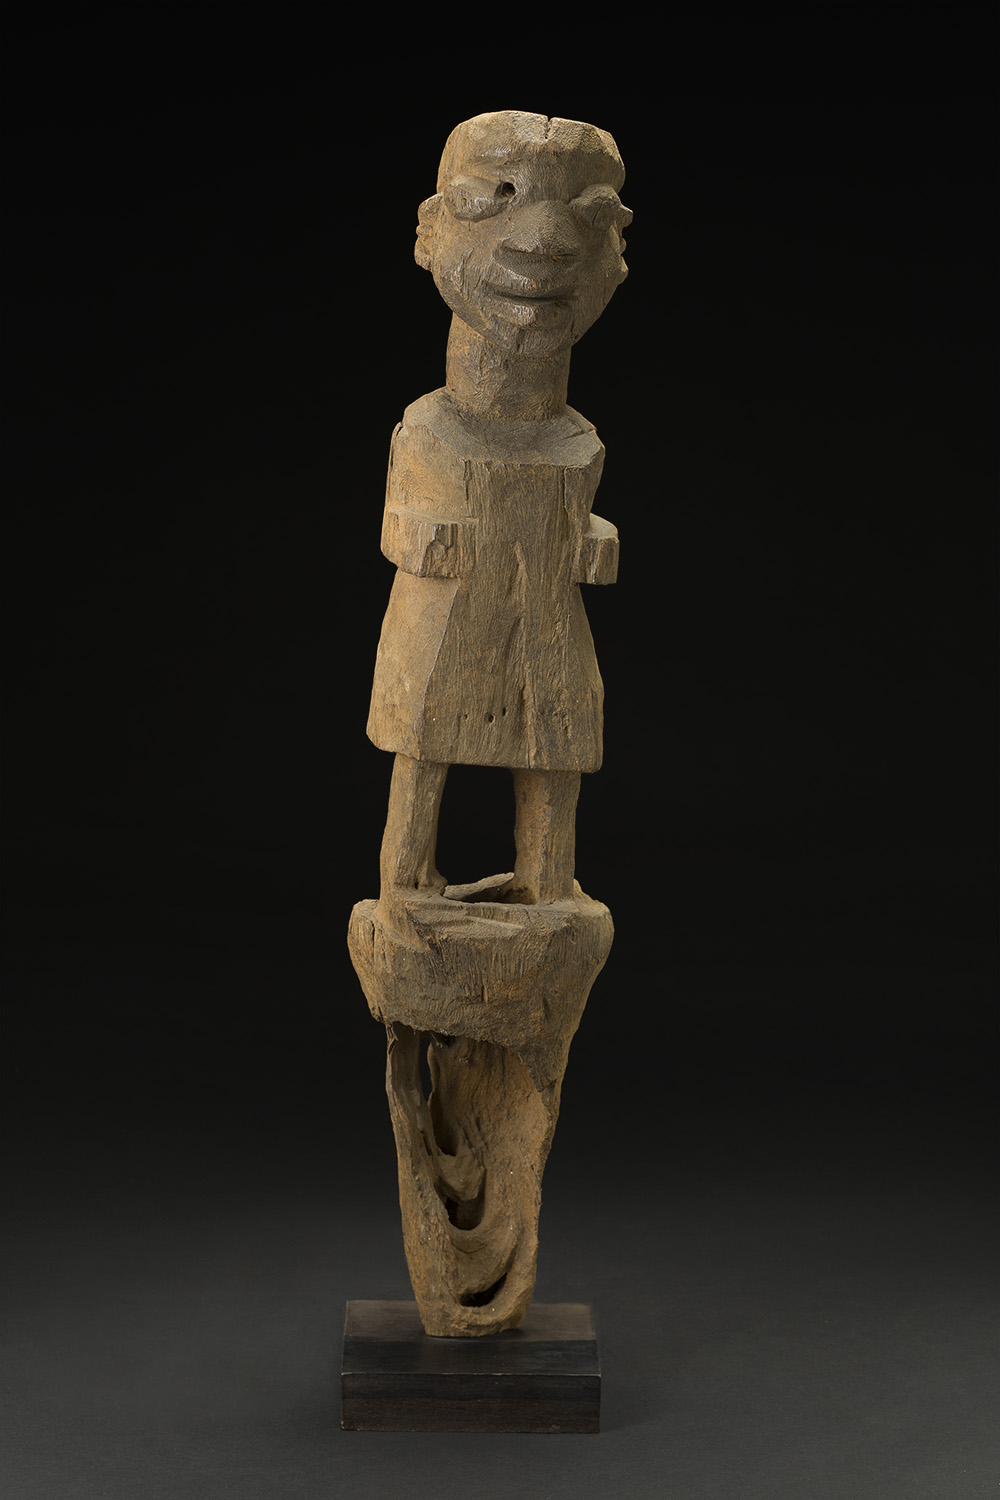   Africa    Bocio - Nago People - Benin  , Early 20th C. Wood 28 x 5 x 6 inches 71.1 x 12.7 x 15.2 cm Af 297 